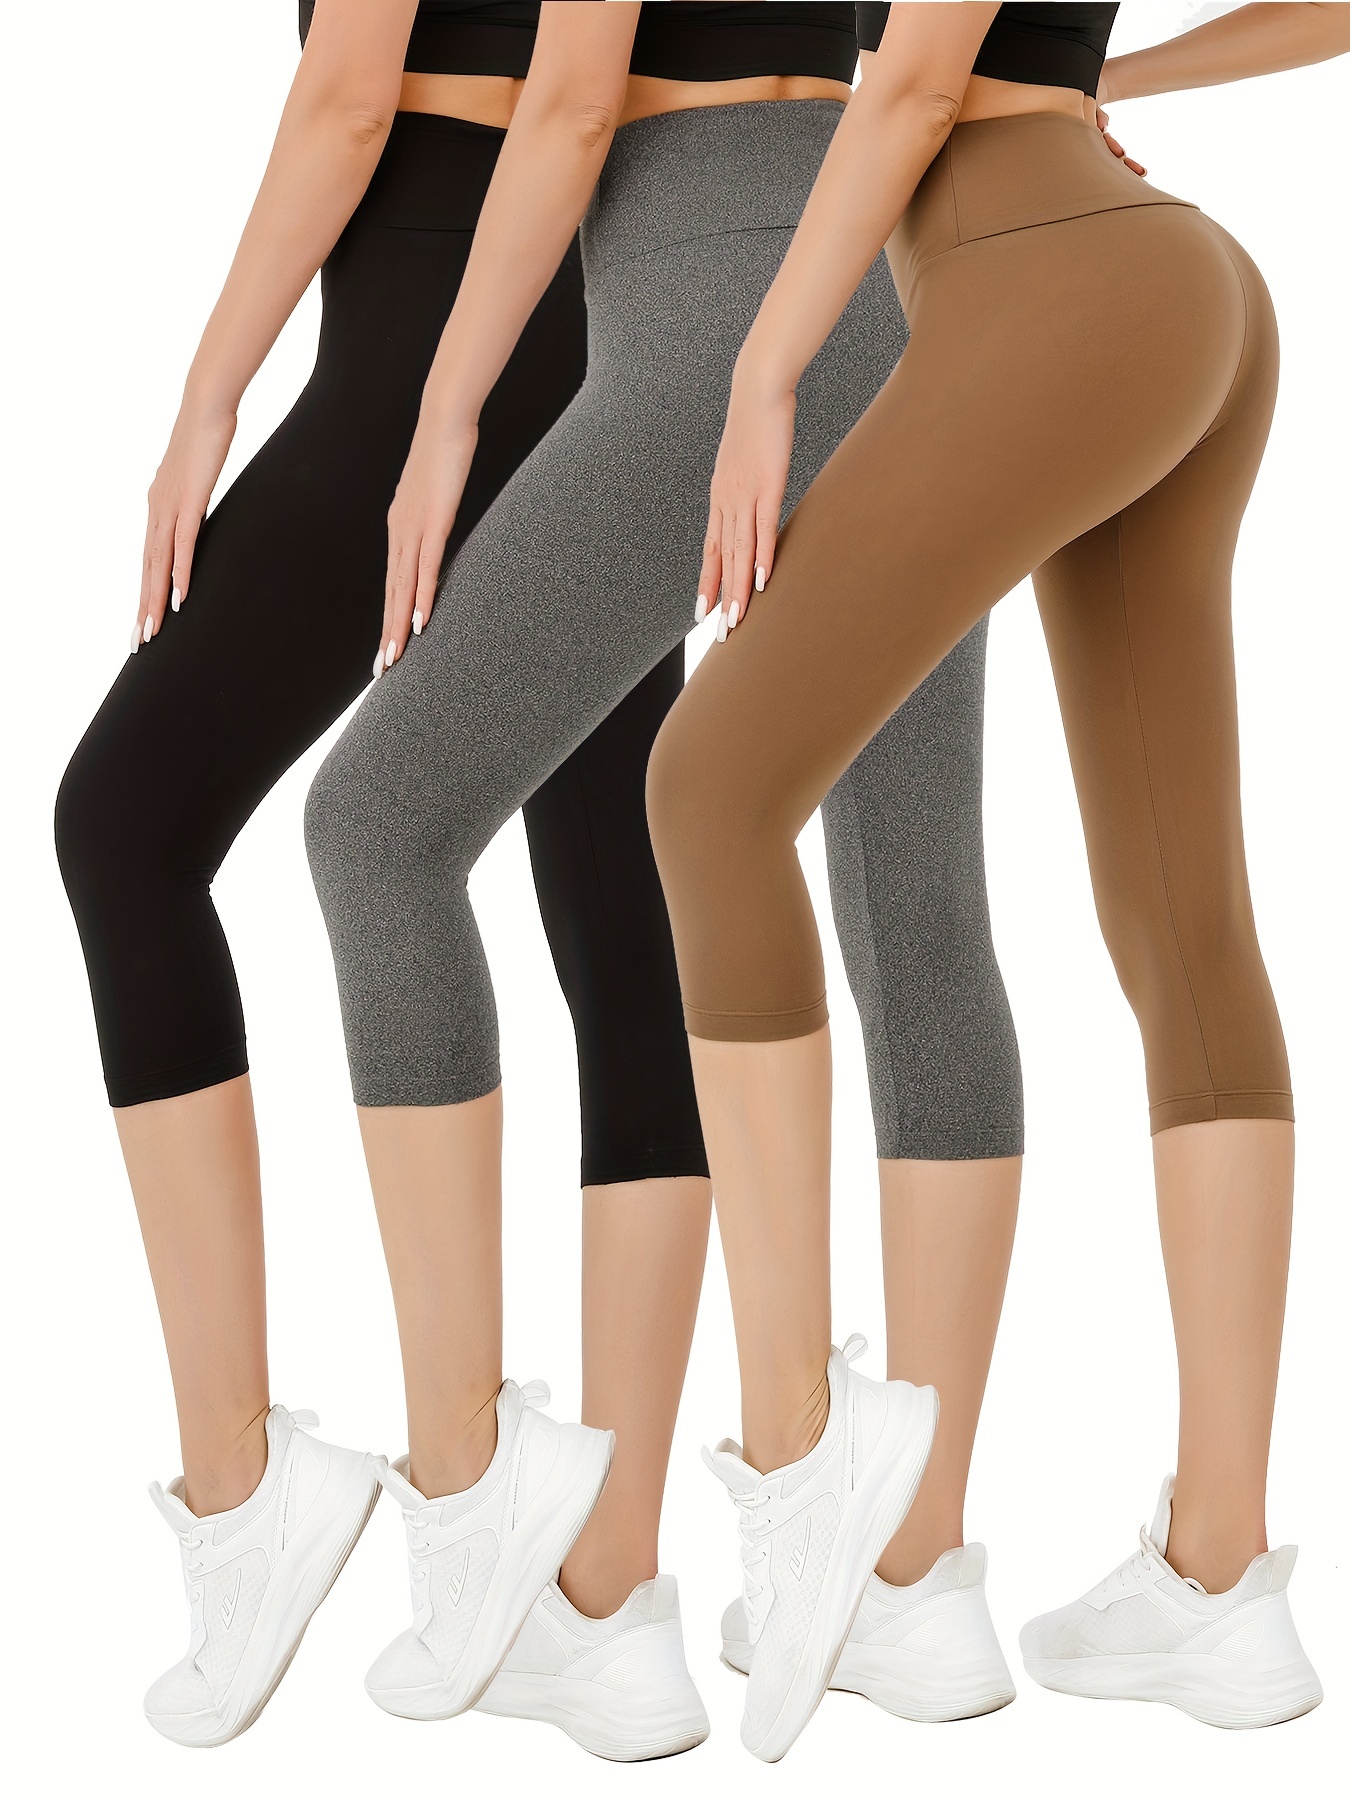 KINPLE Capri Leggings for Women - High Waisted Capris Soft Tummy Control  Yoga Pants Workout Tights